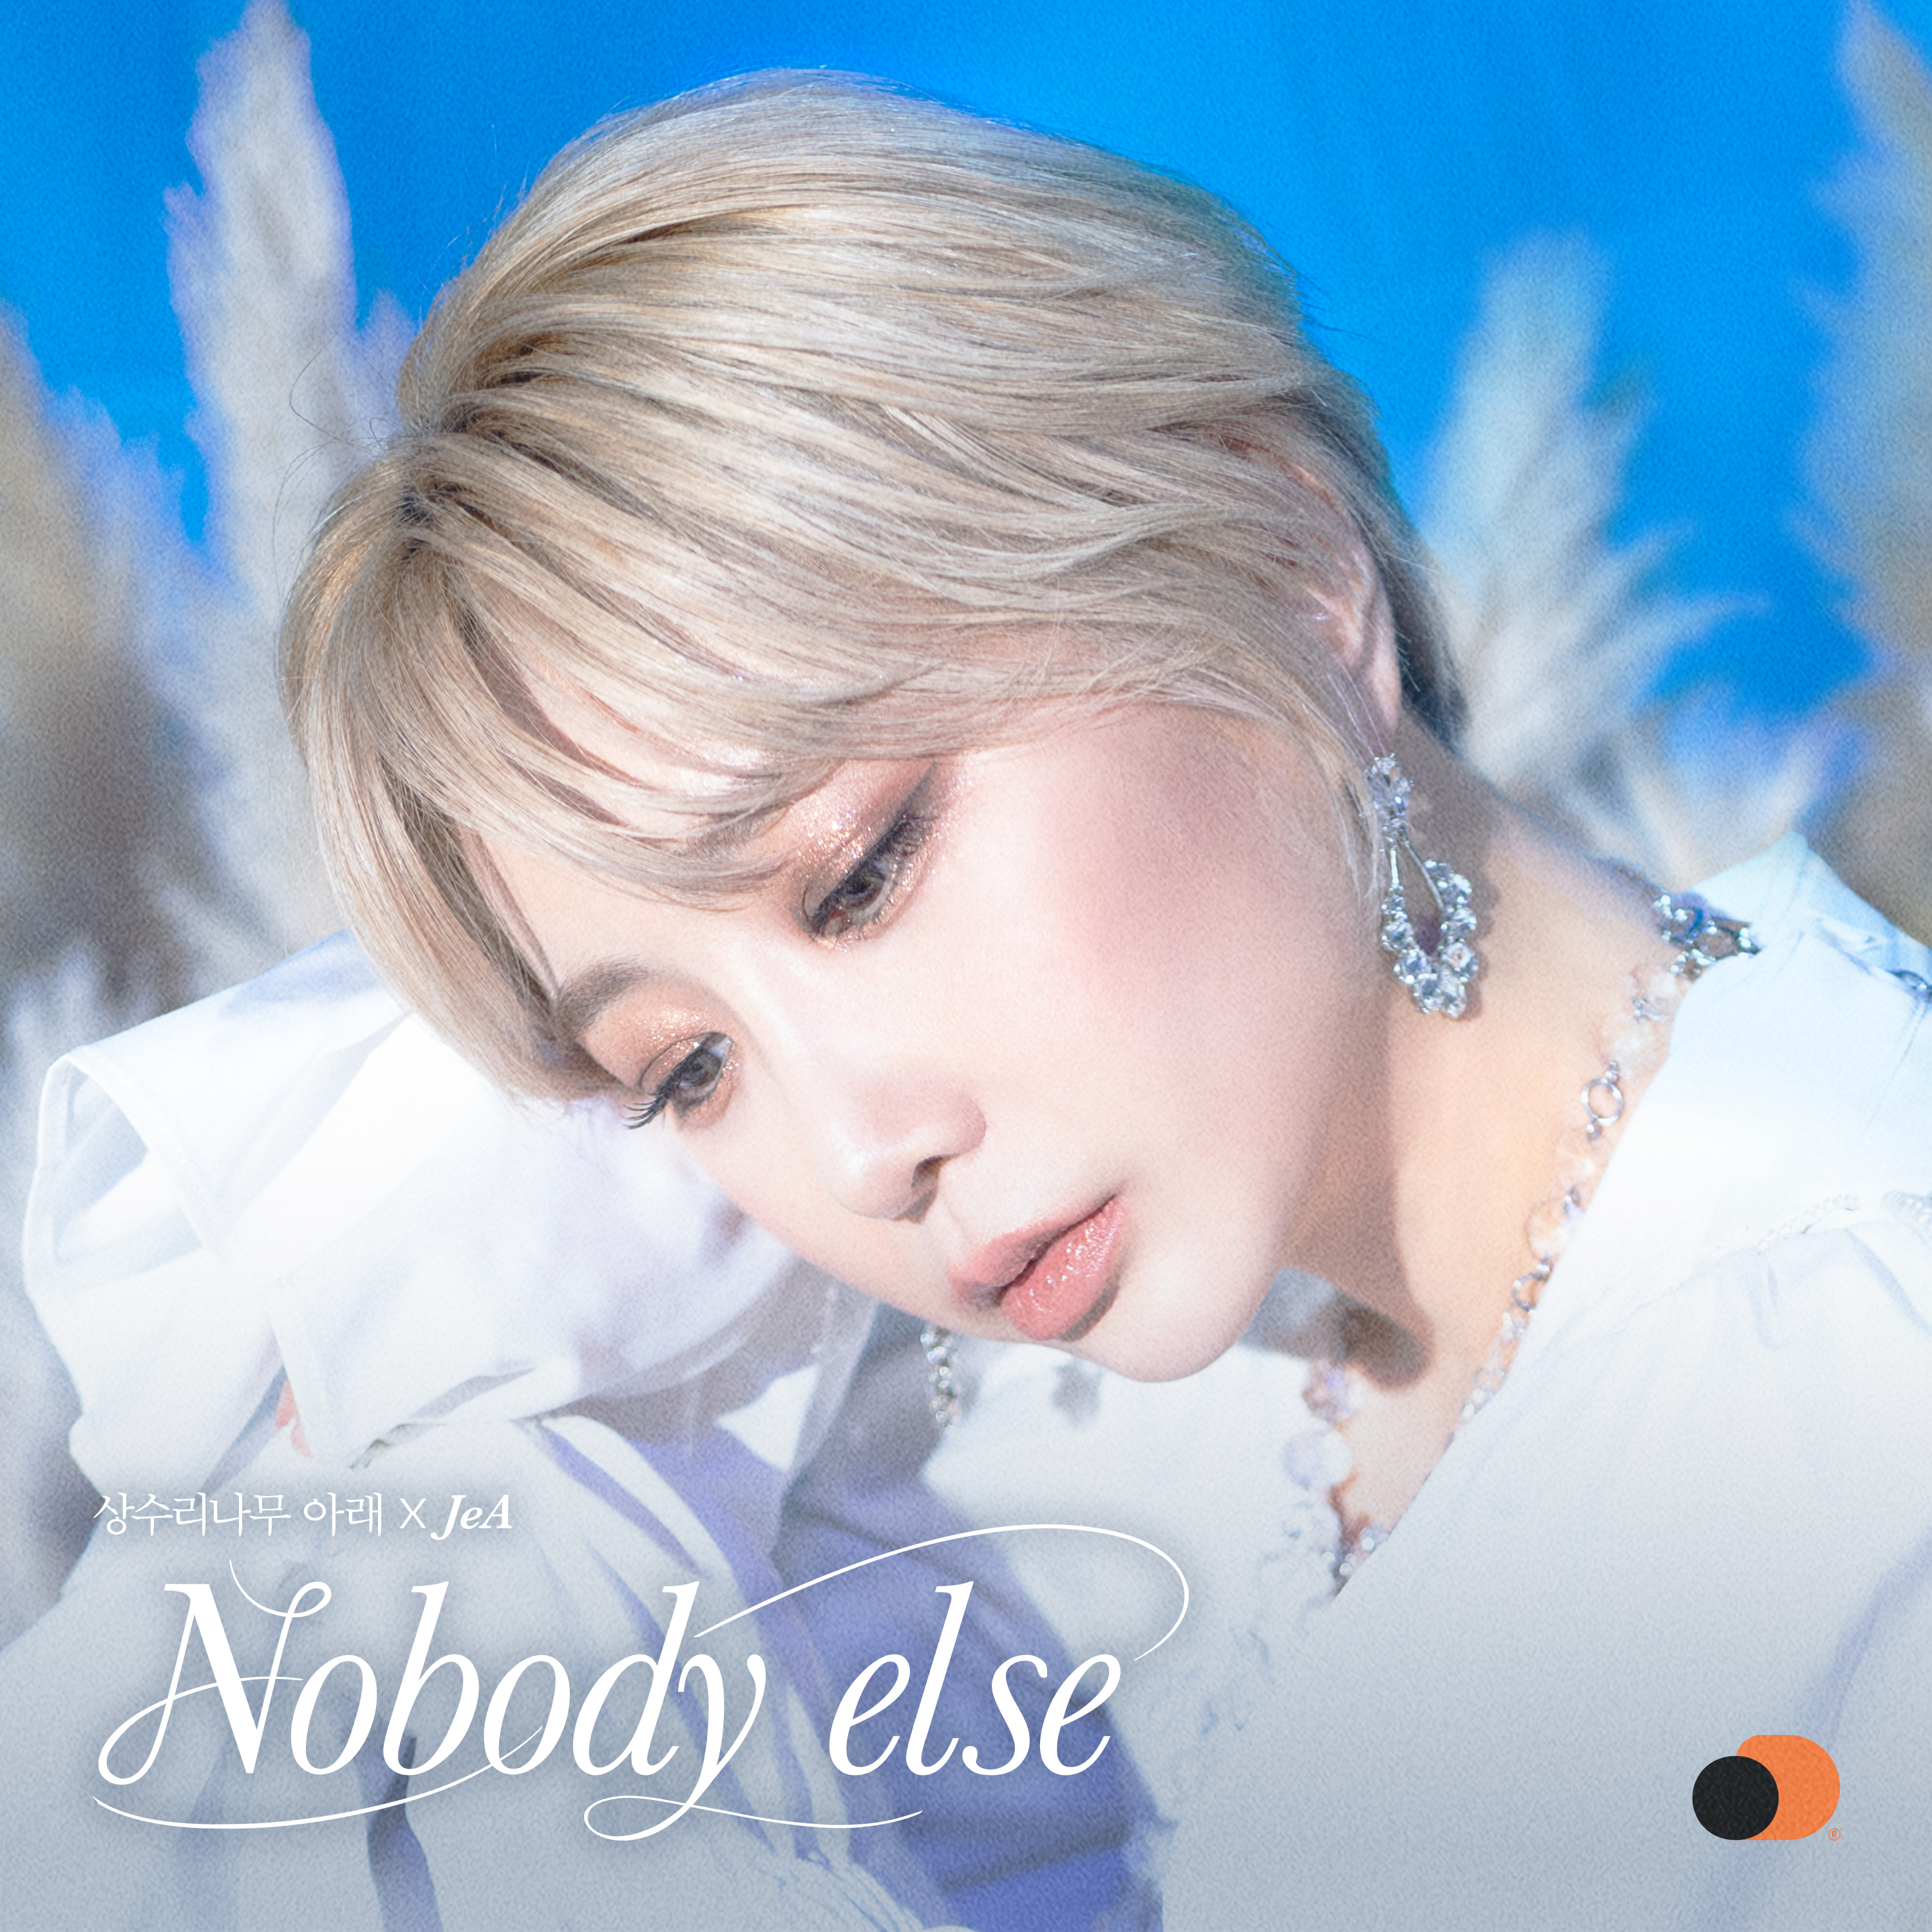 [情報] Nobody else (在橡樹下 X JeA)